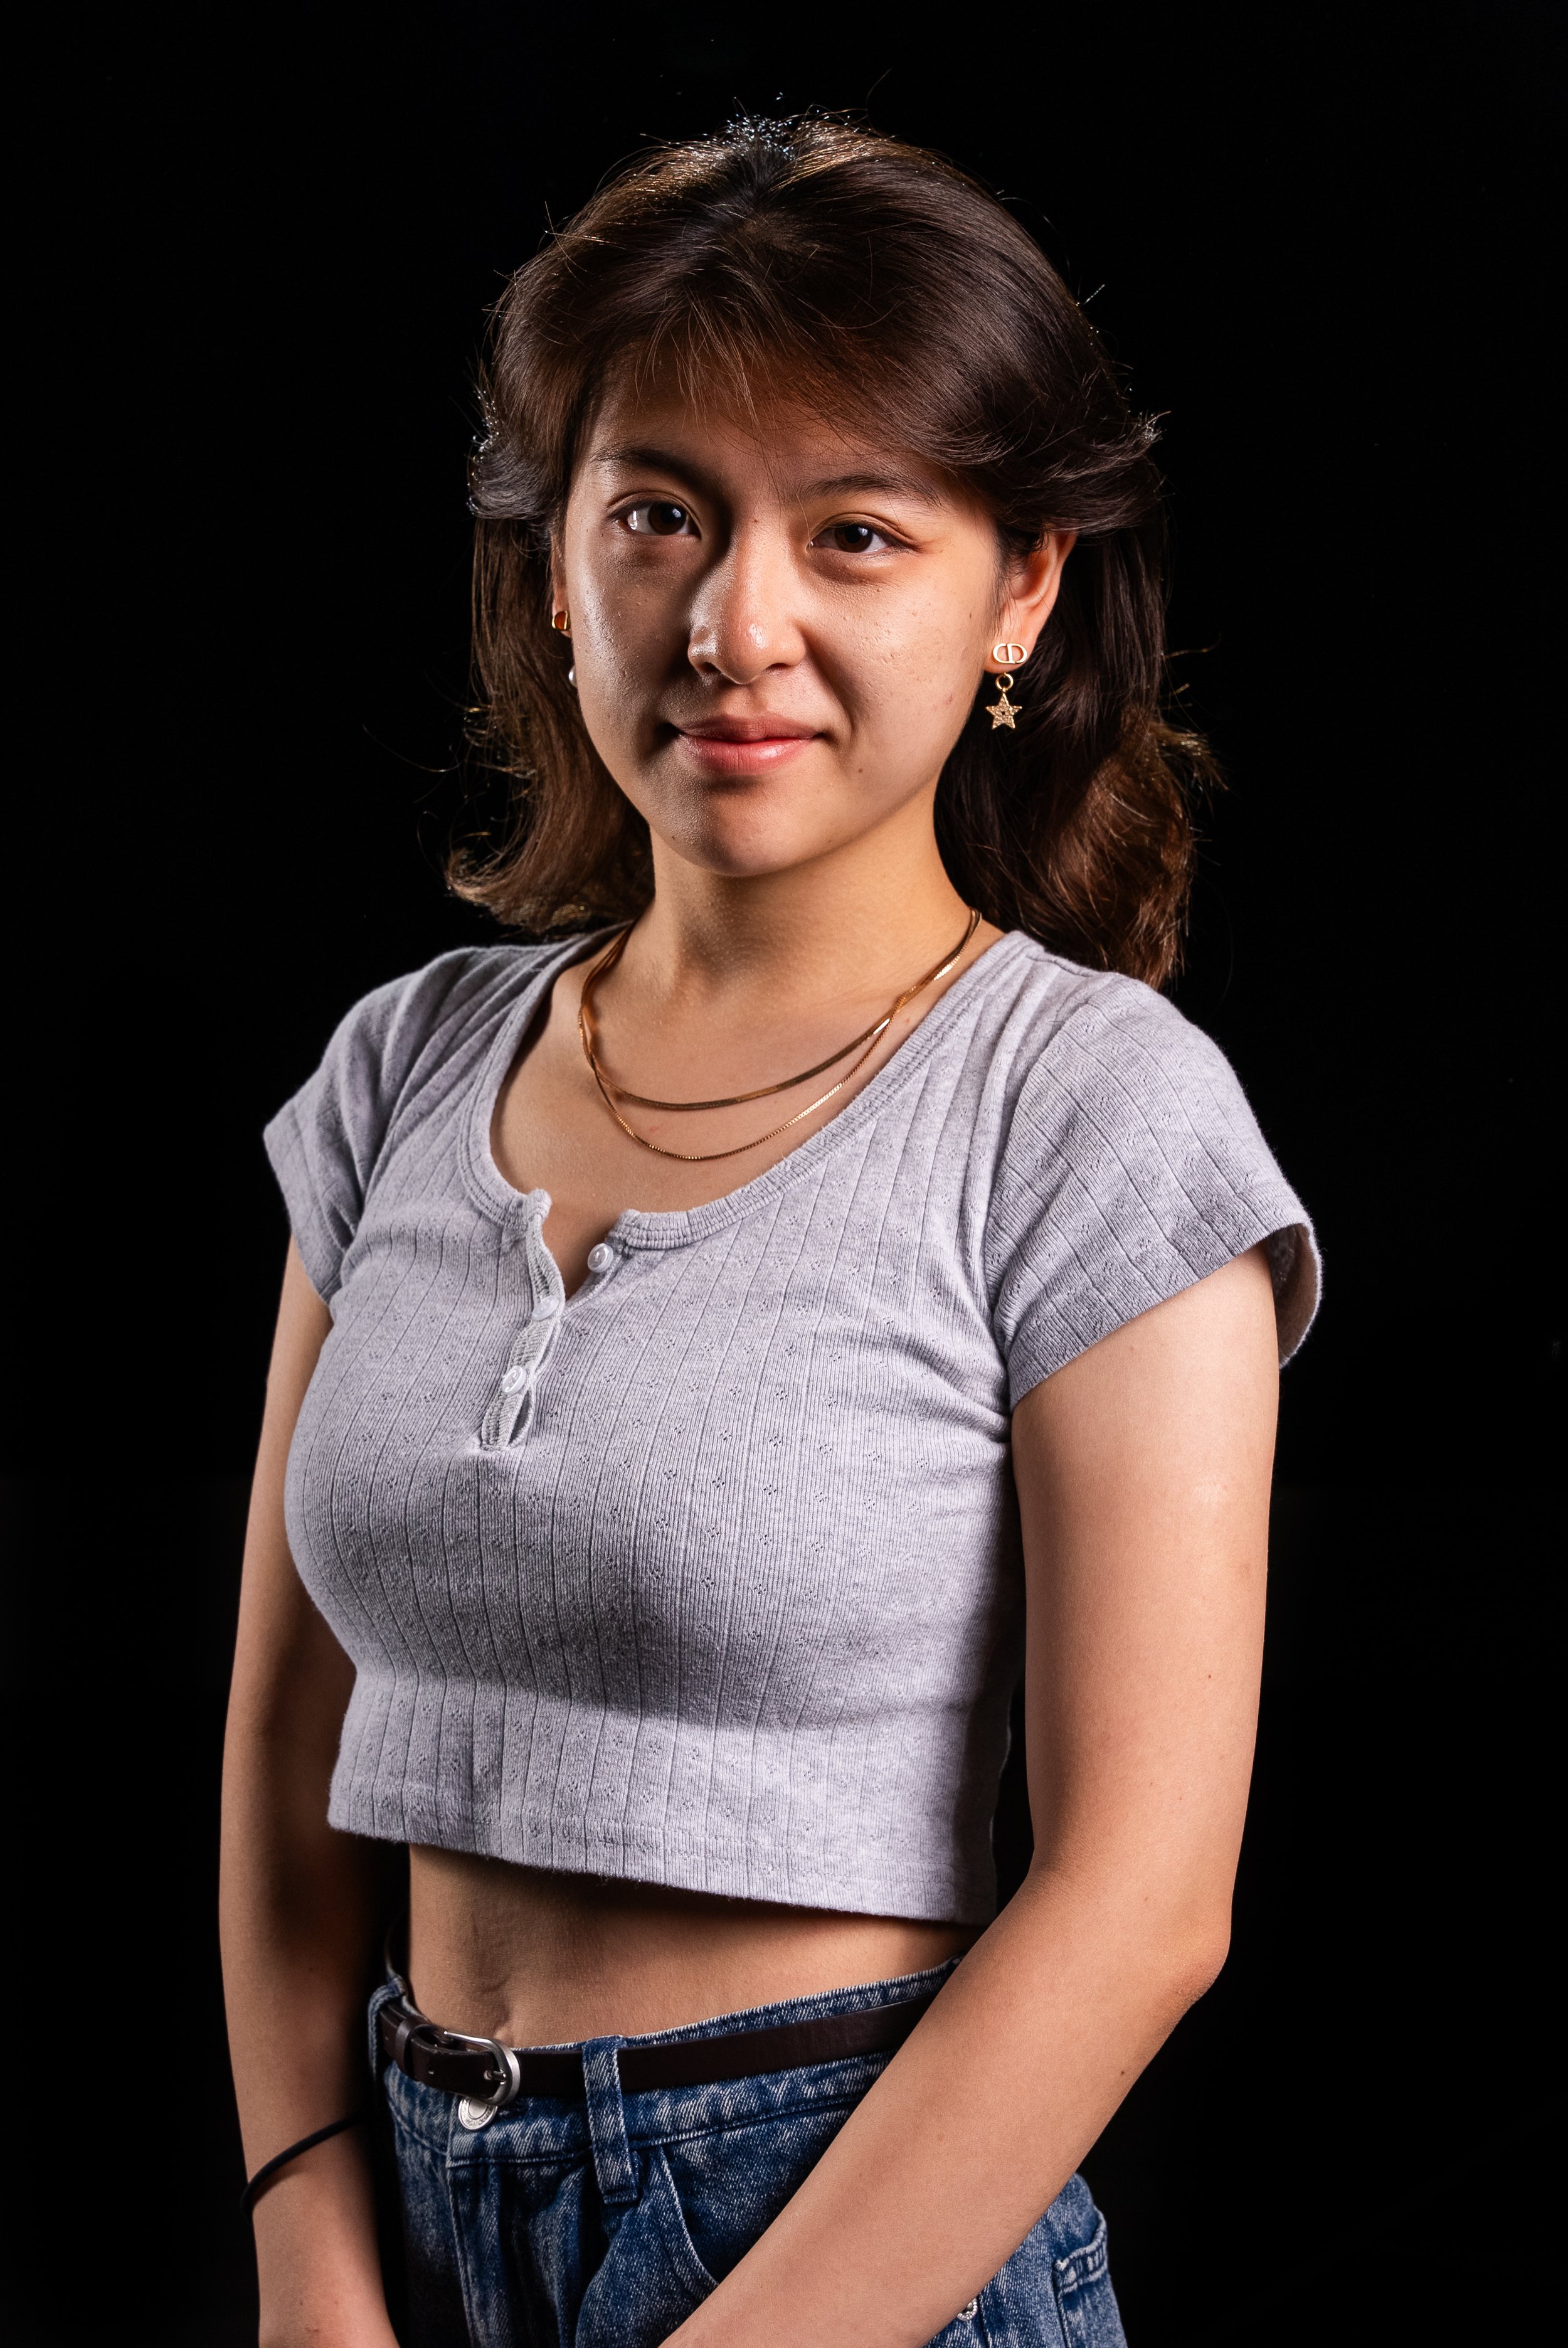 Maggie Zhang